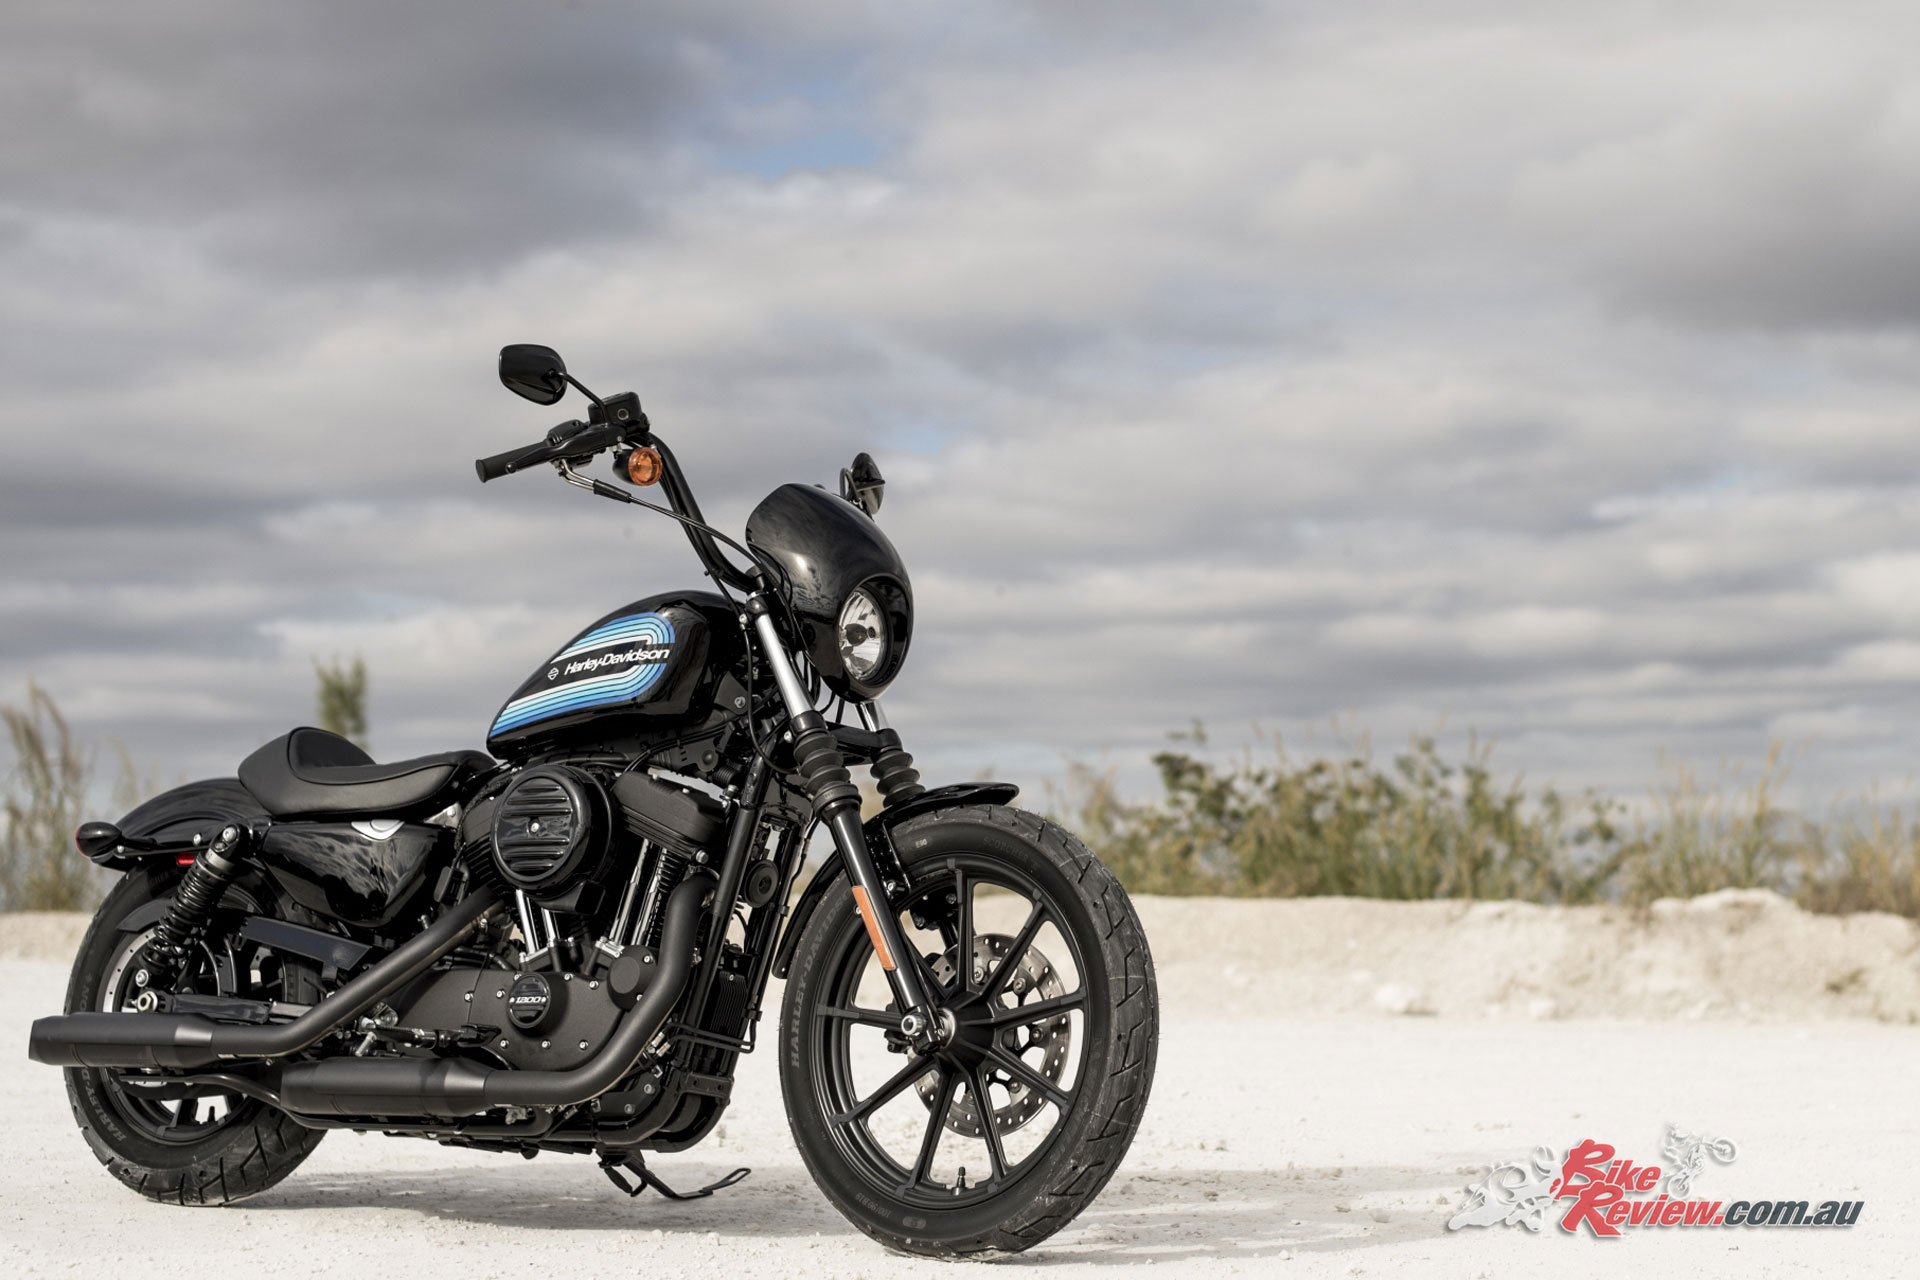 New Model 2018 Harley Davidson Iron 1200 Bike Review